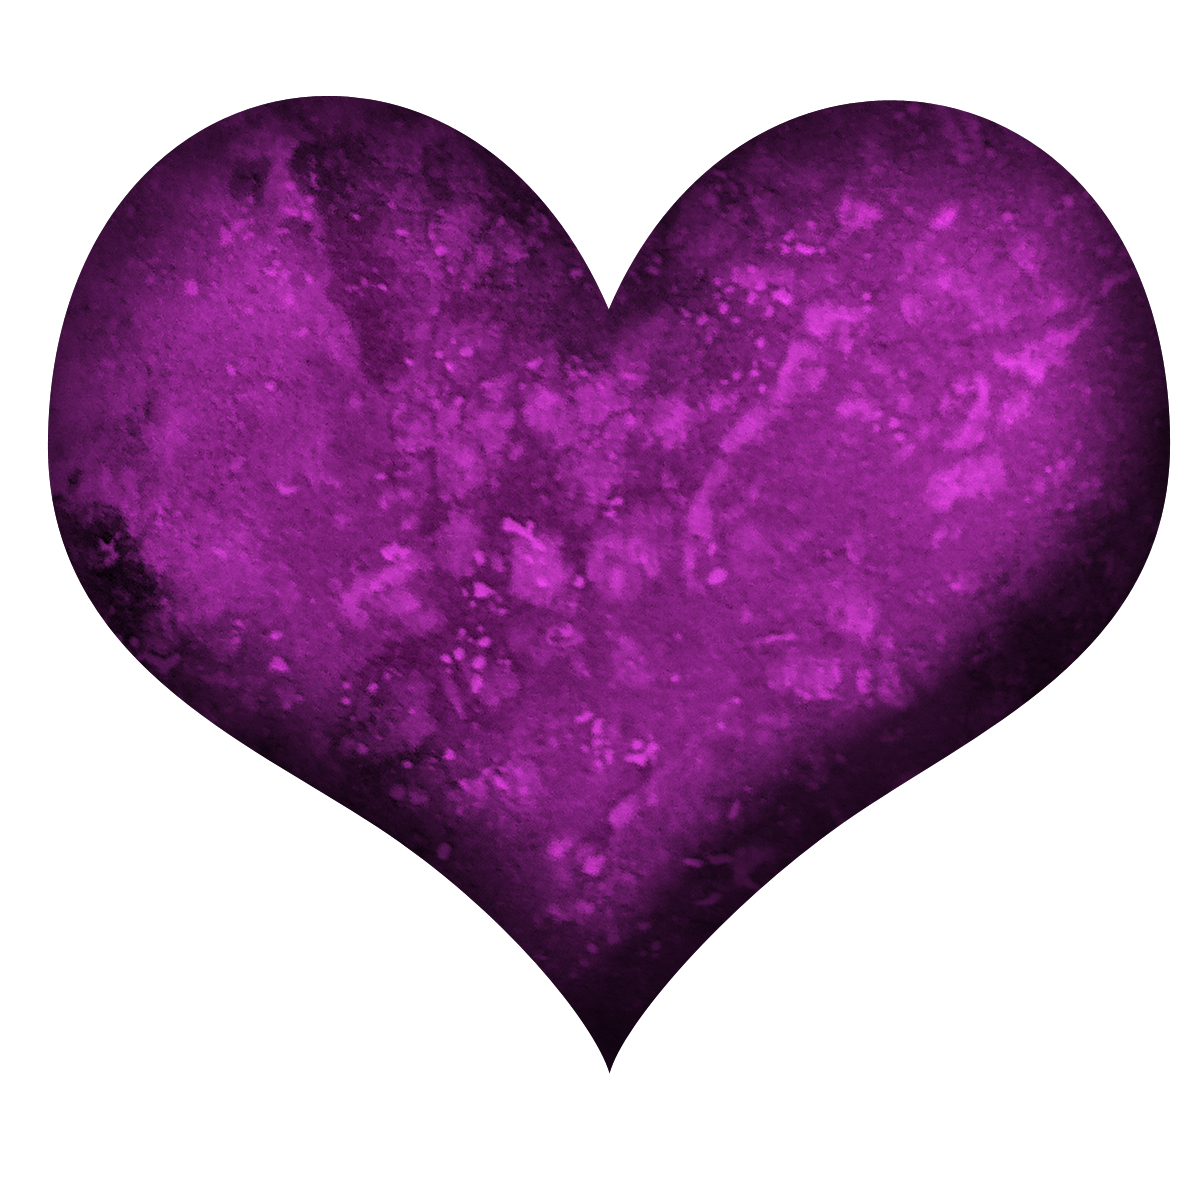 Черно розовое сердце. Сердце фиолетовое. Фиолетовые сердечки. Сиреневое сердечко. Сердечко без фона.